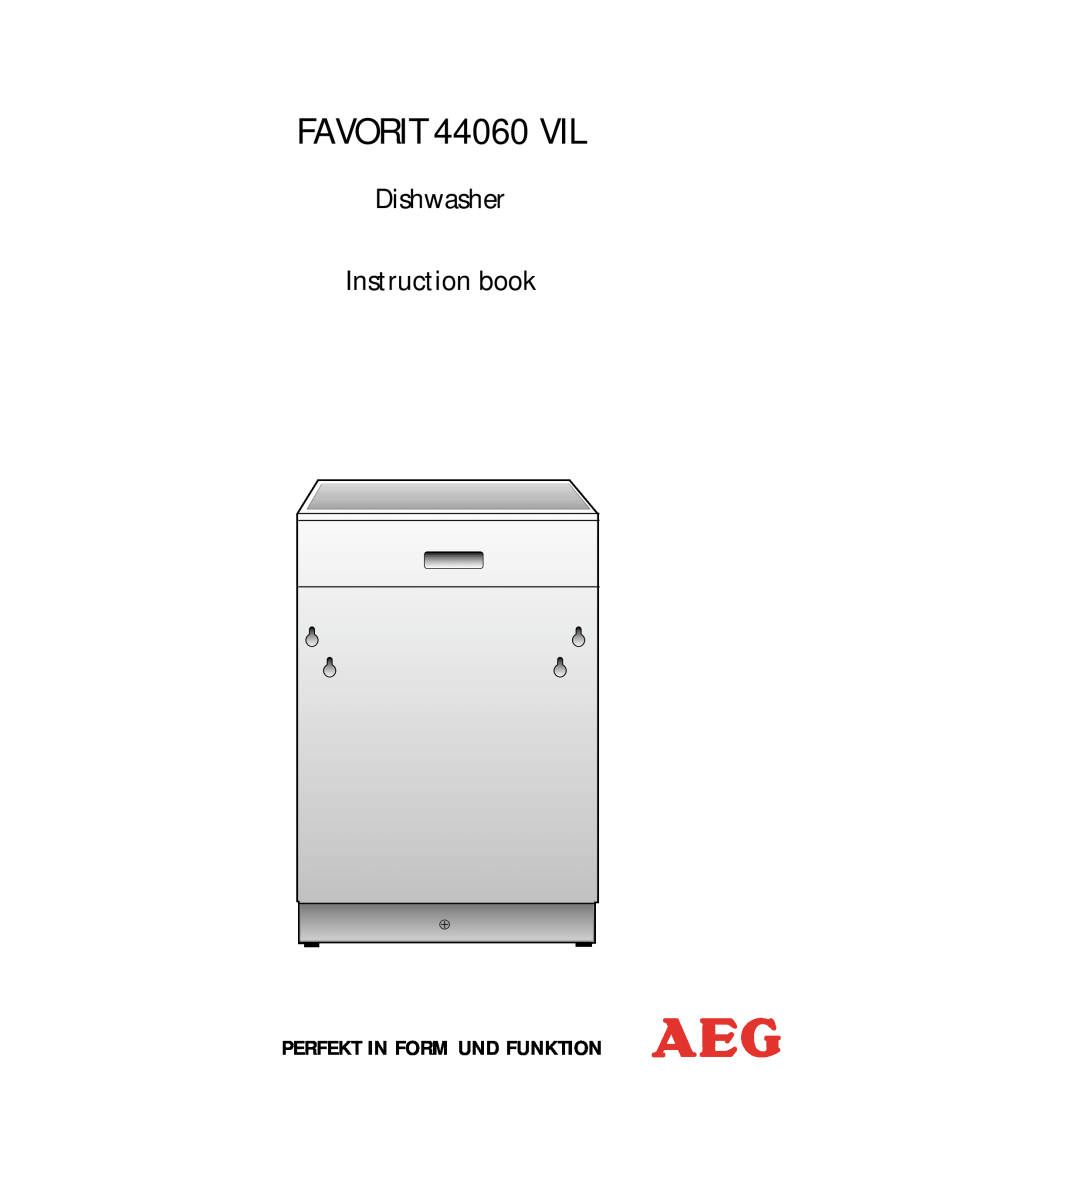 AEG manual Perfekt In Form Und Funktion, FAVORIT 44060 VIL, Dishwasher Instruction book 